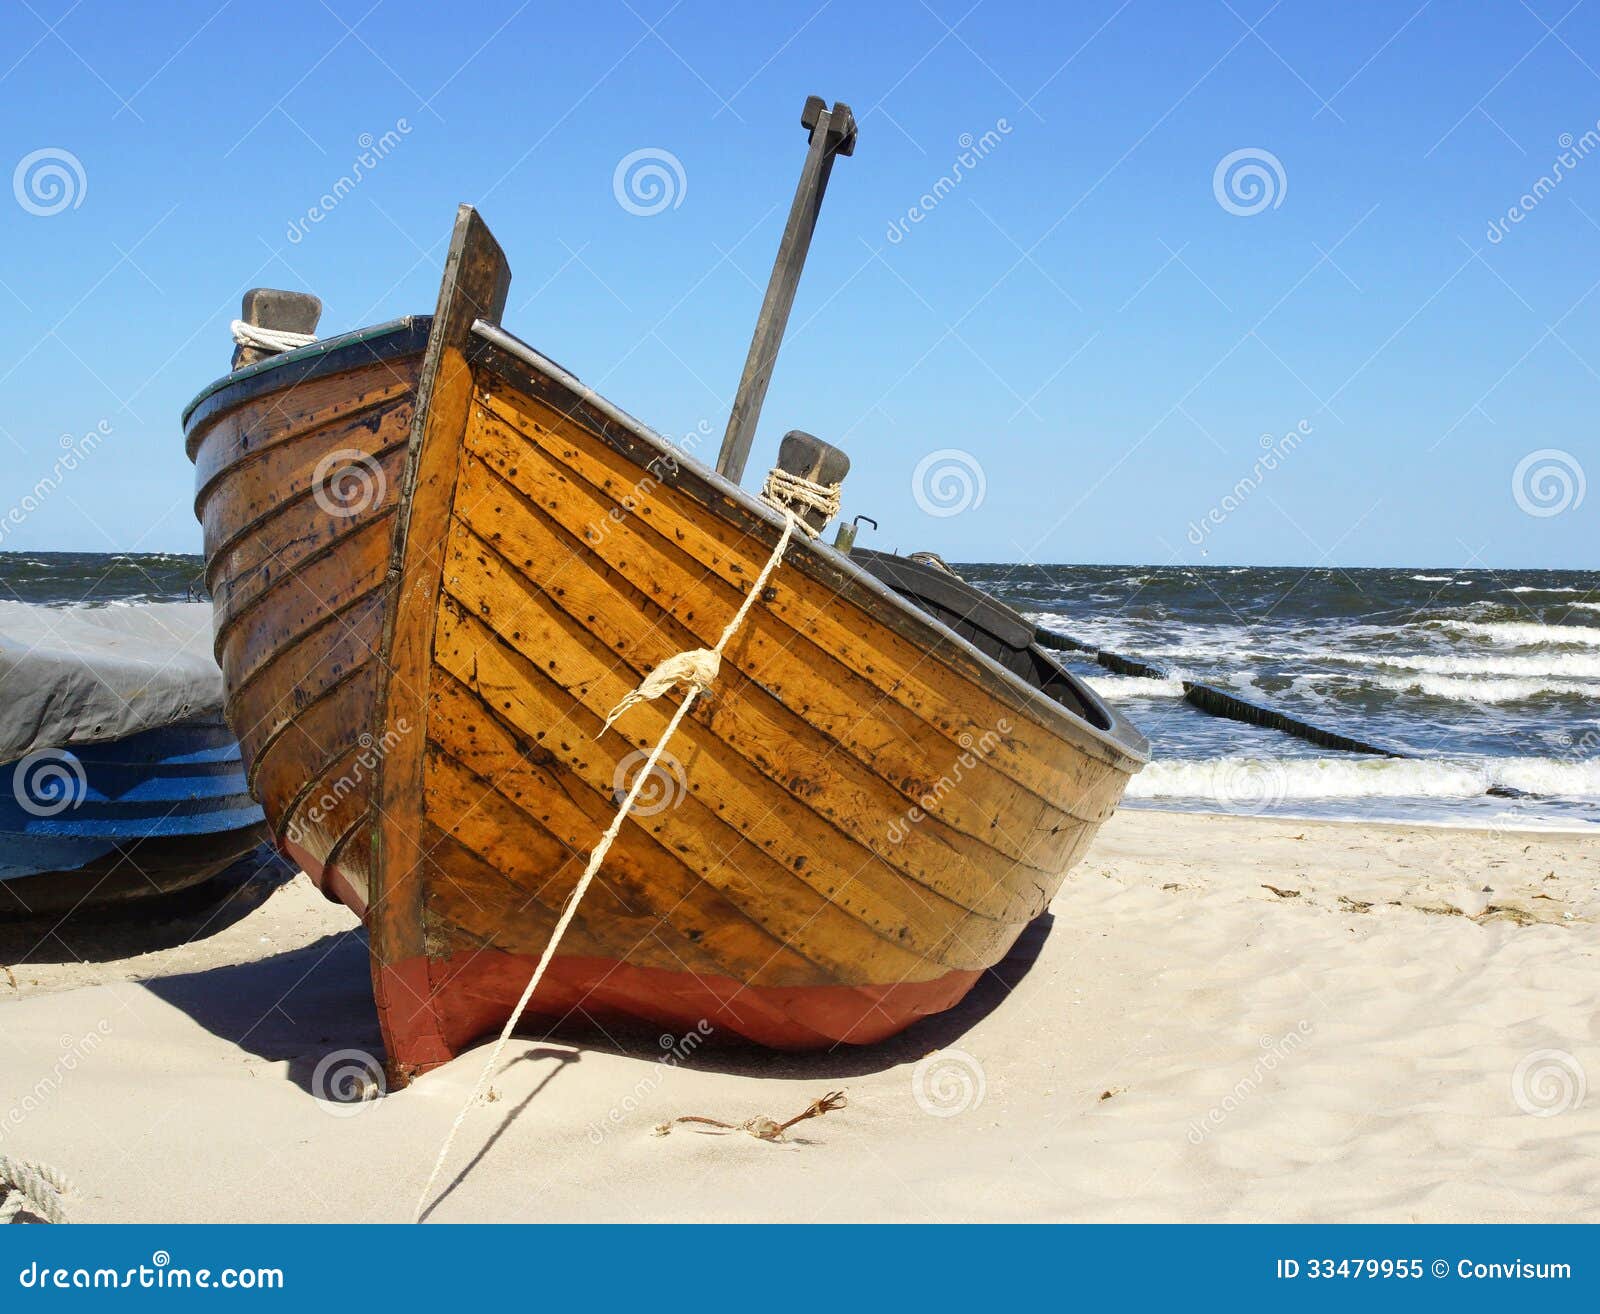 Fishing Boat On Beach Royalty Free Stock Photo - Image ...